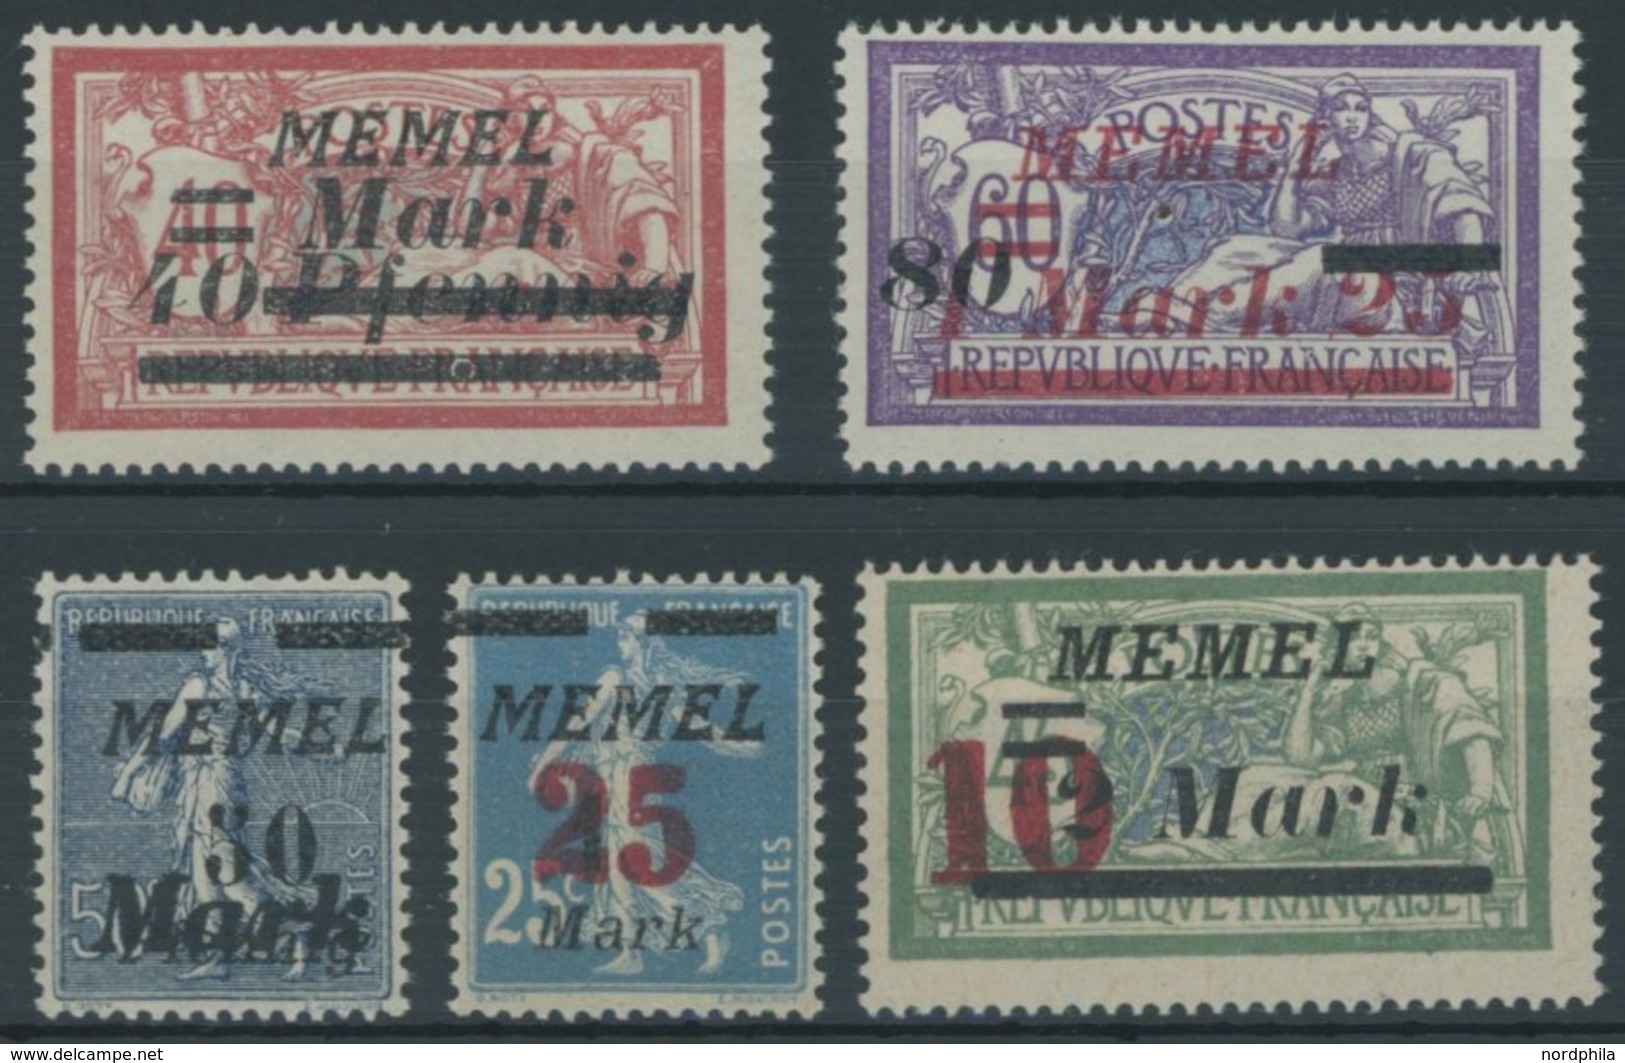 MEMELGEBIET 119-23 **, 1922/3, Staatsdruckerei Paris Und Staatsdruckerei Rytas, Postfrisch, 5 Prachtwerte, Mi. 64.- - Memel (Klaïpeda) 1923